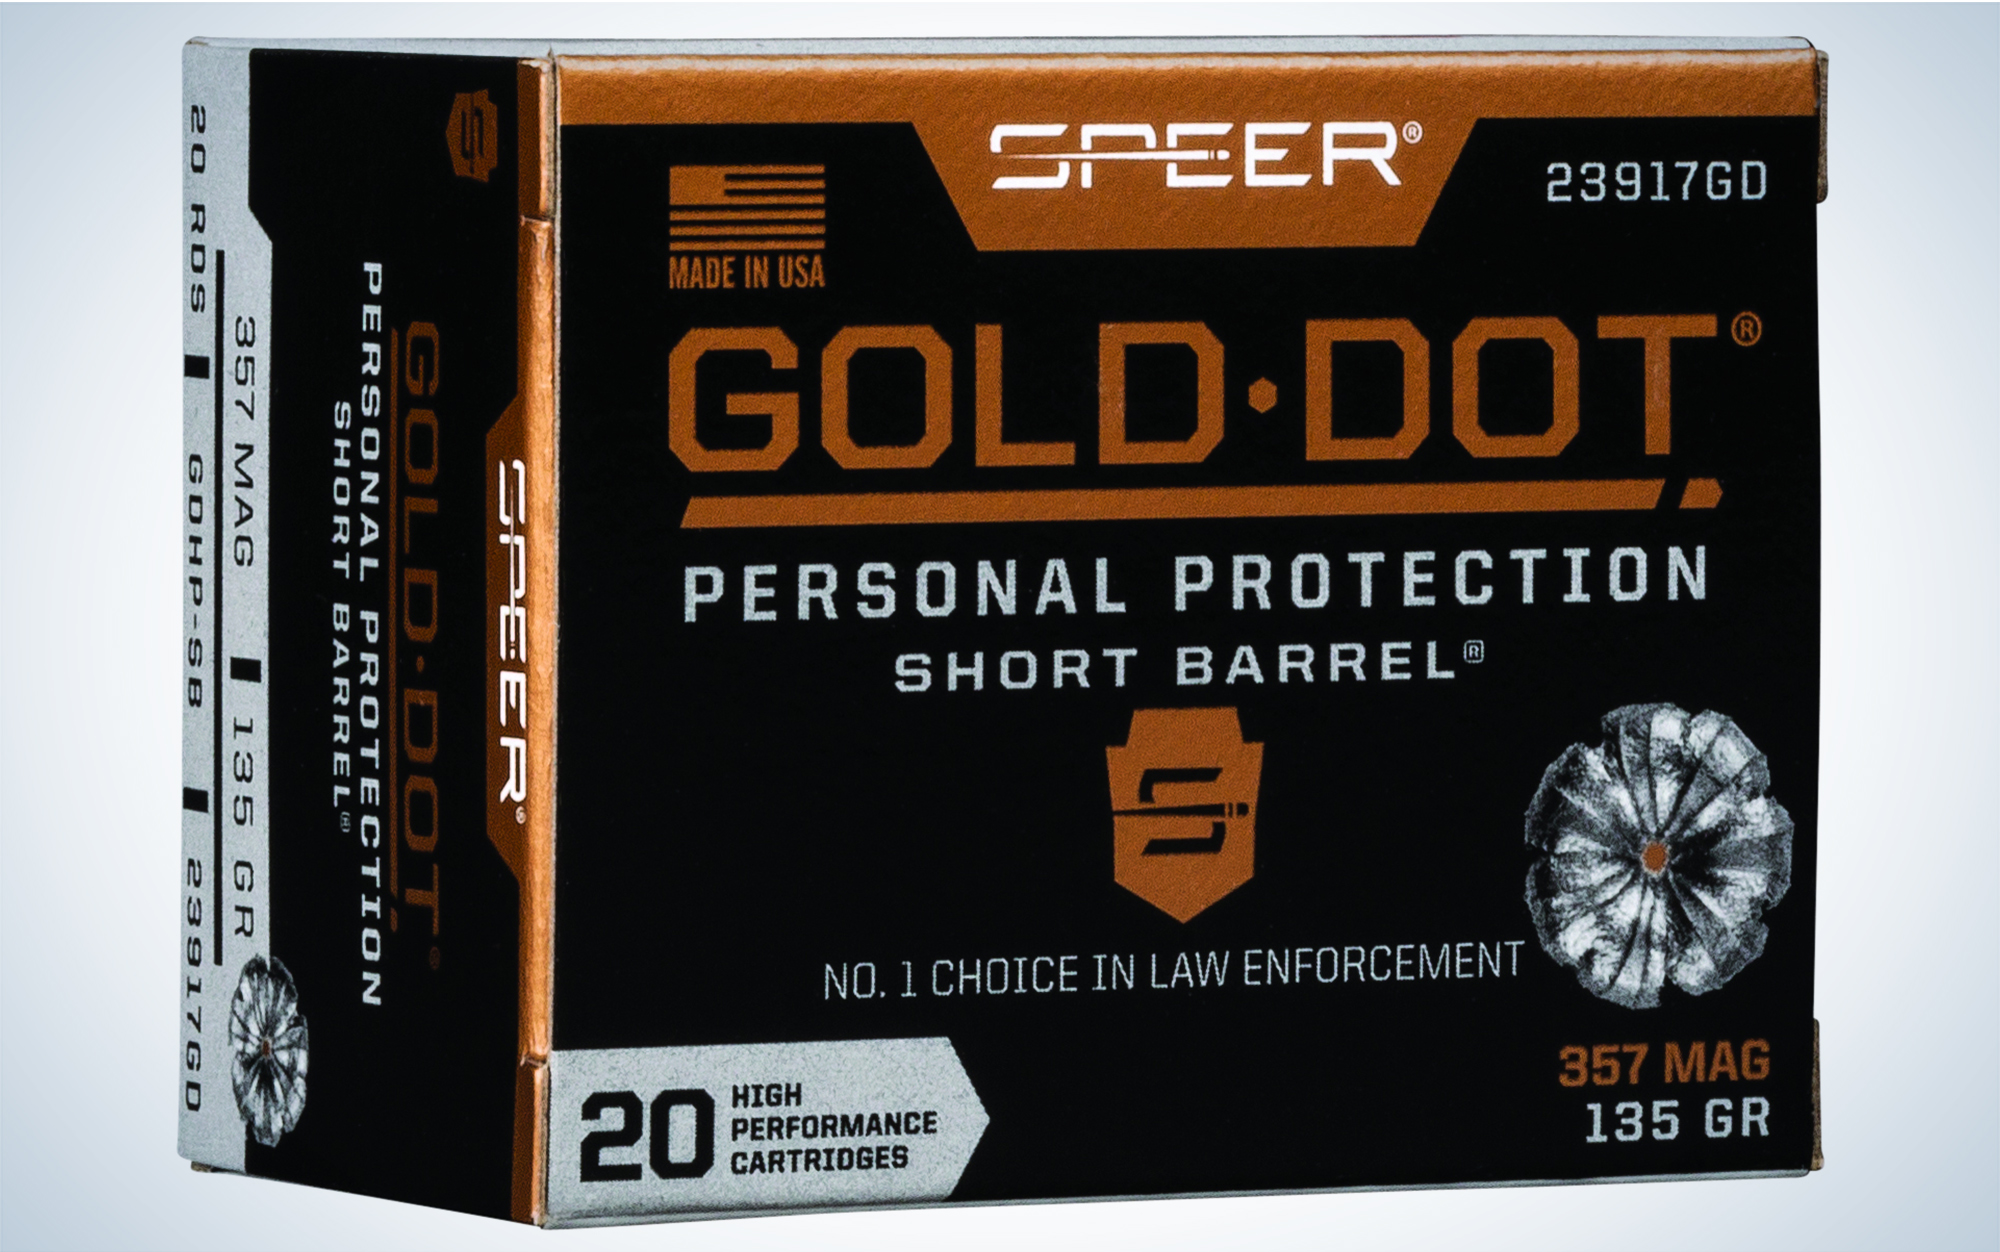 Speer Gold Dot Short Barrel Personal Protection 135 Grain JHP